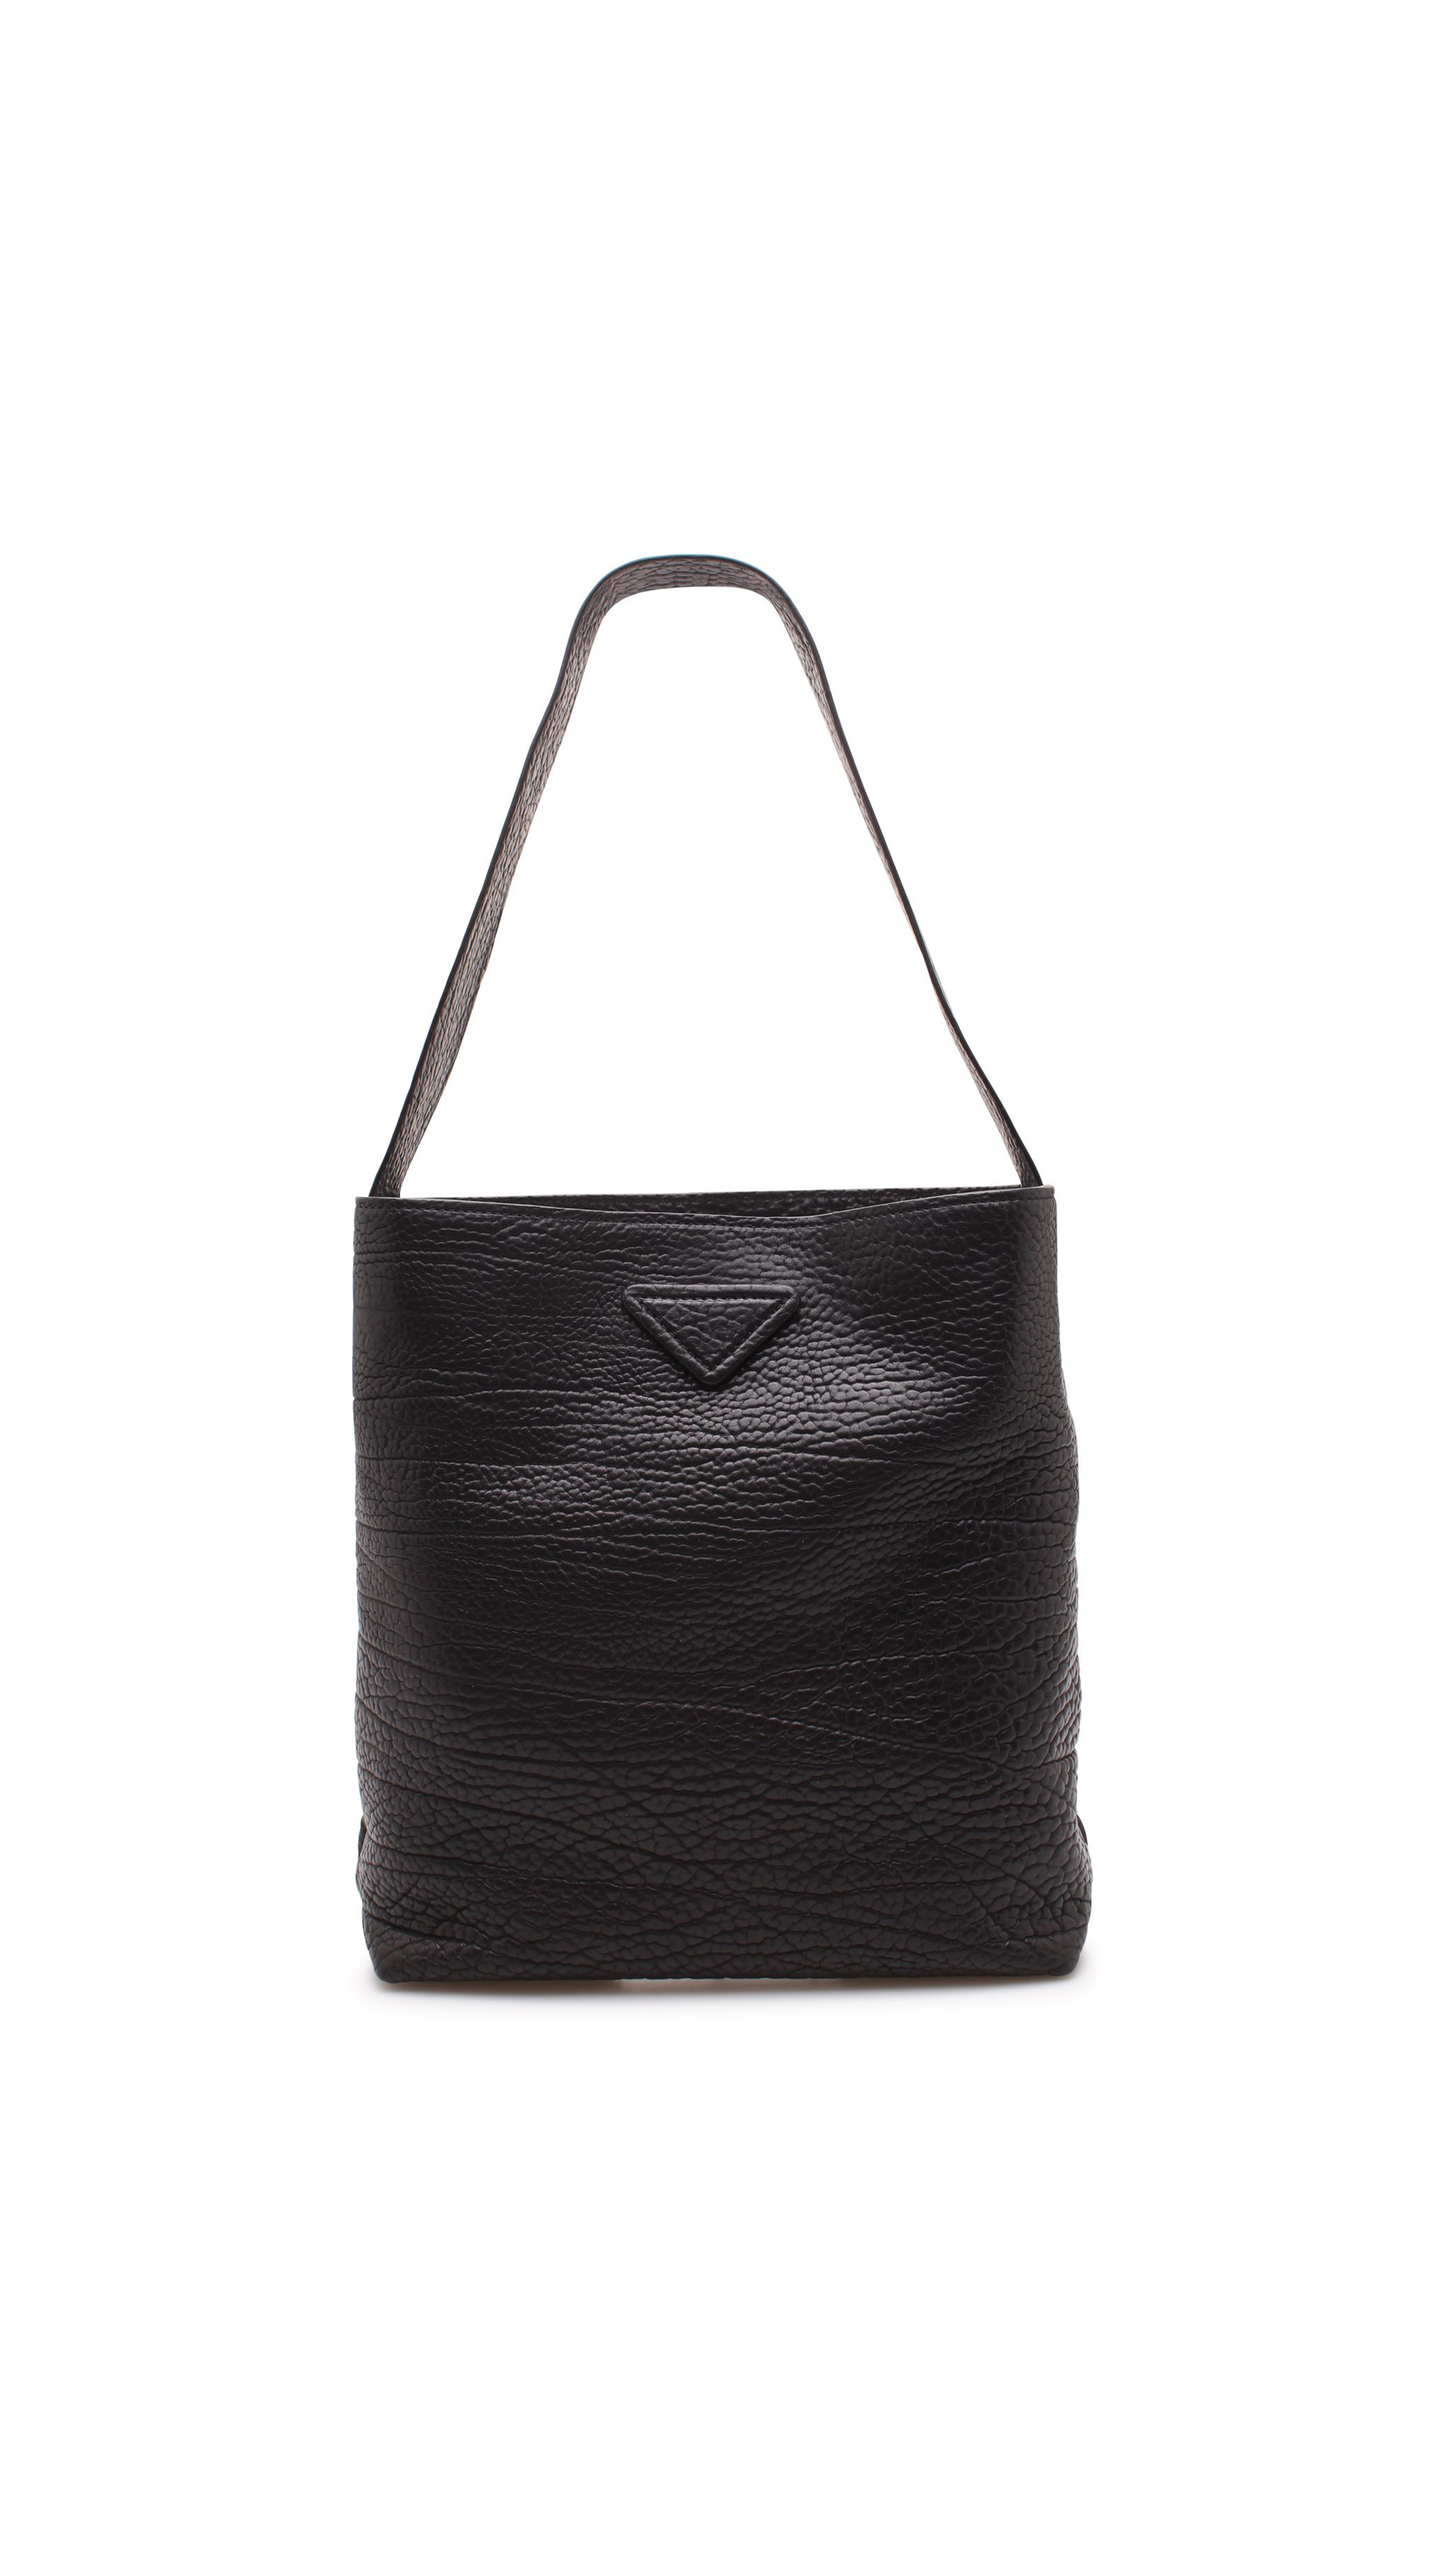 Hammered Leather Shopping Bag - Black